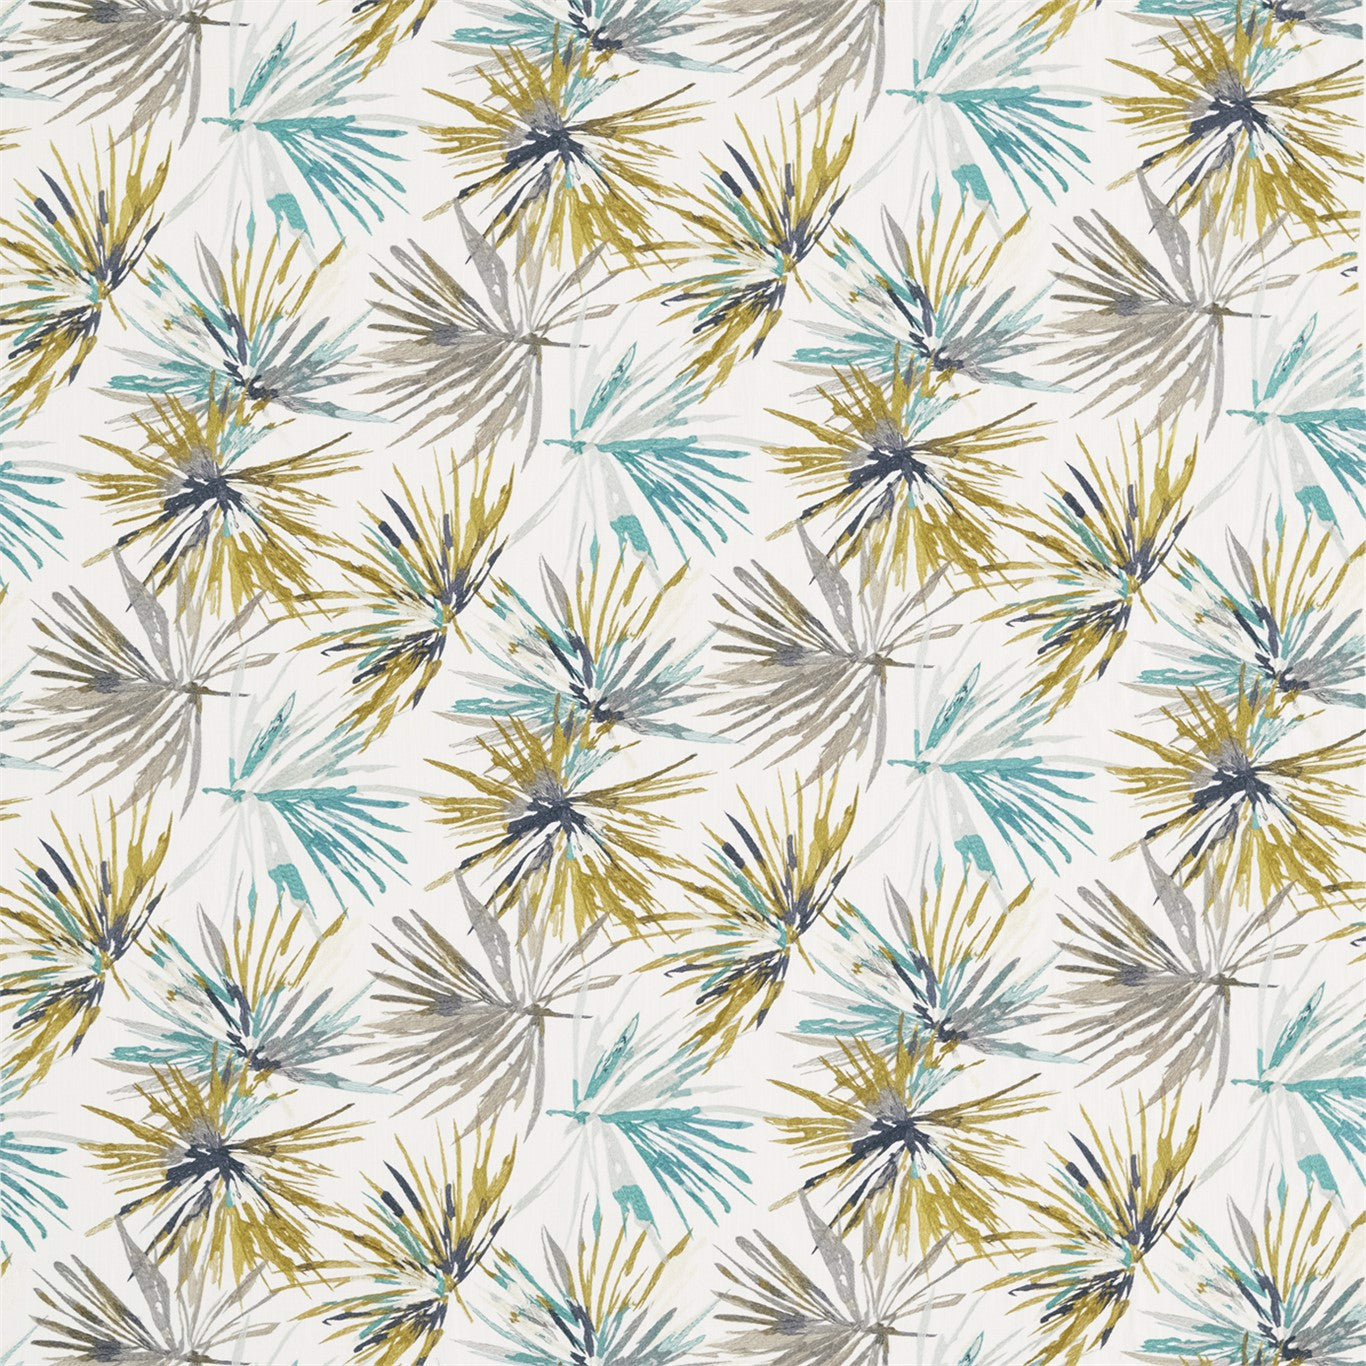 Aucuba Fabric by Harlequin - HMOE132240 - Teal/Zest